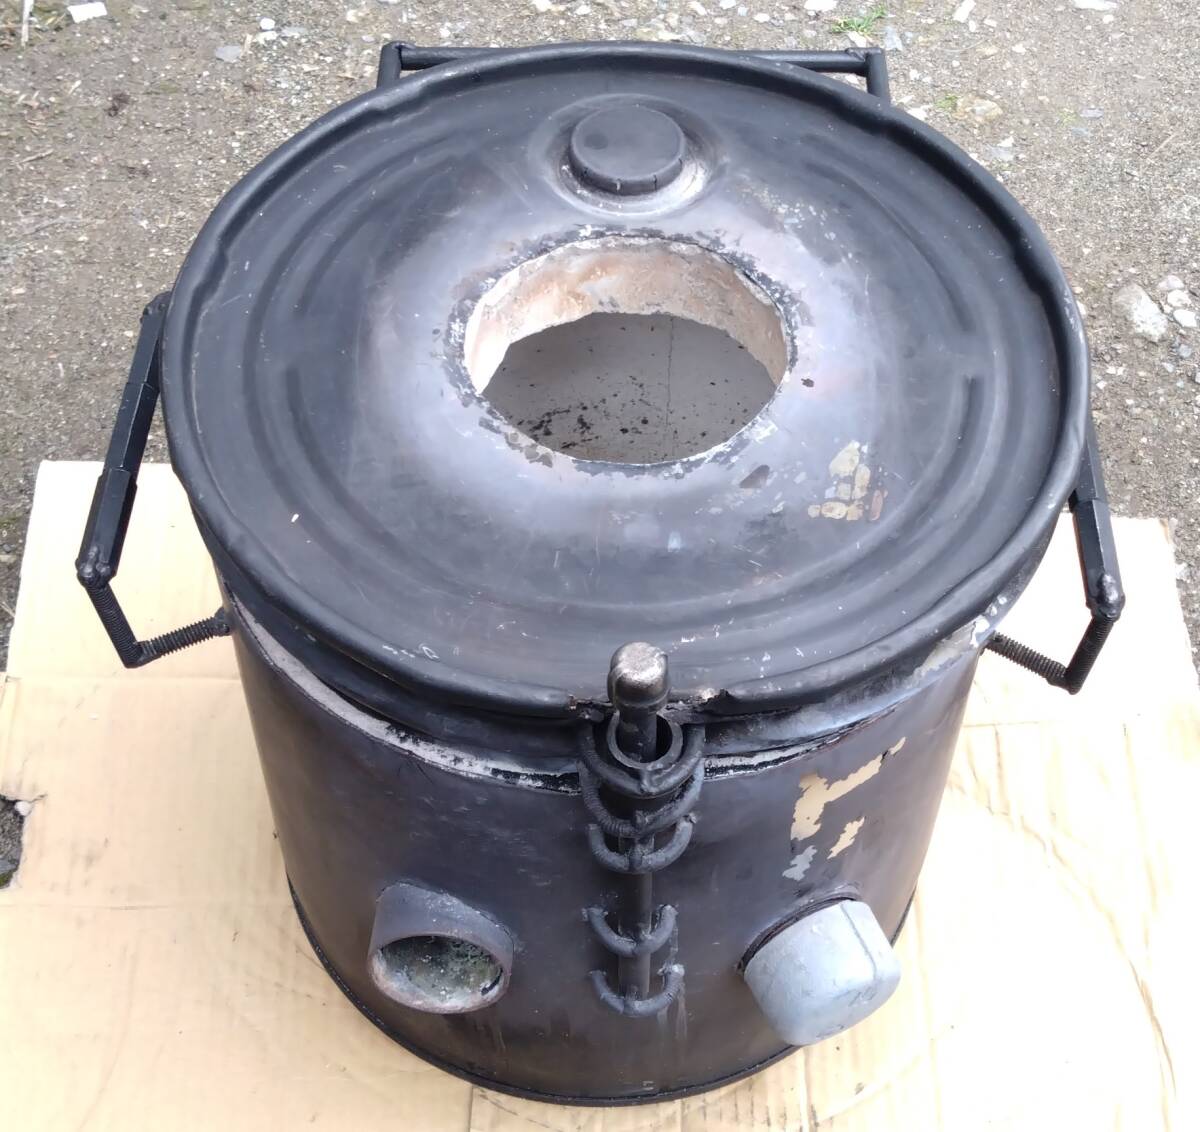  aluminium casting casting ...... set oil burner waste oil burner in goto#22 operation verification animation 